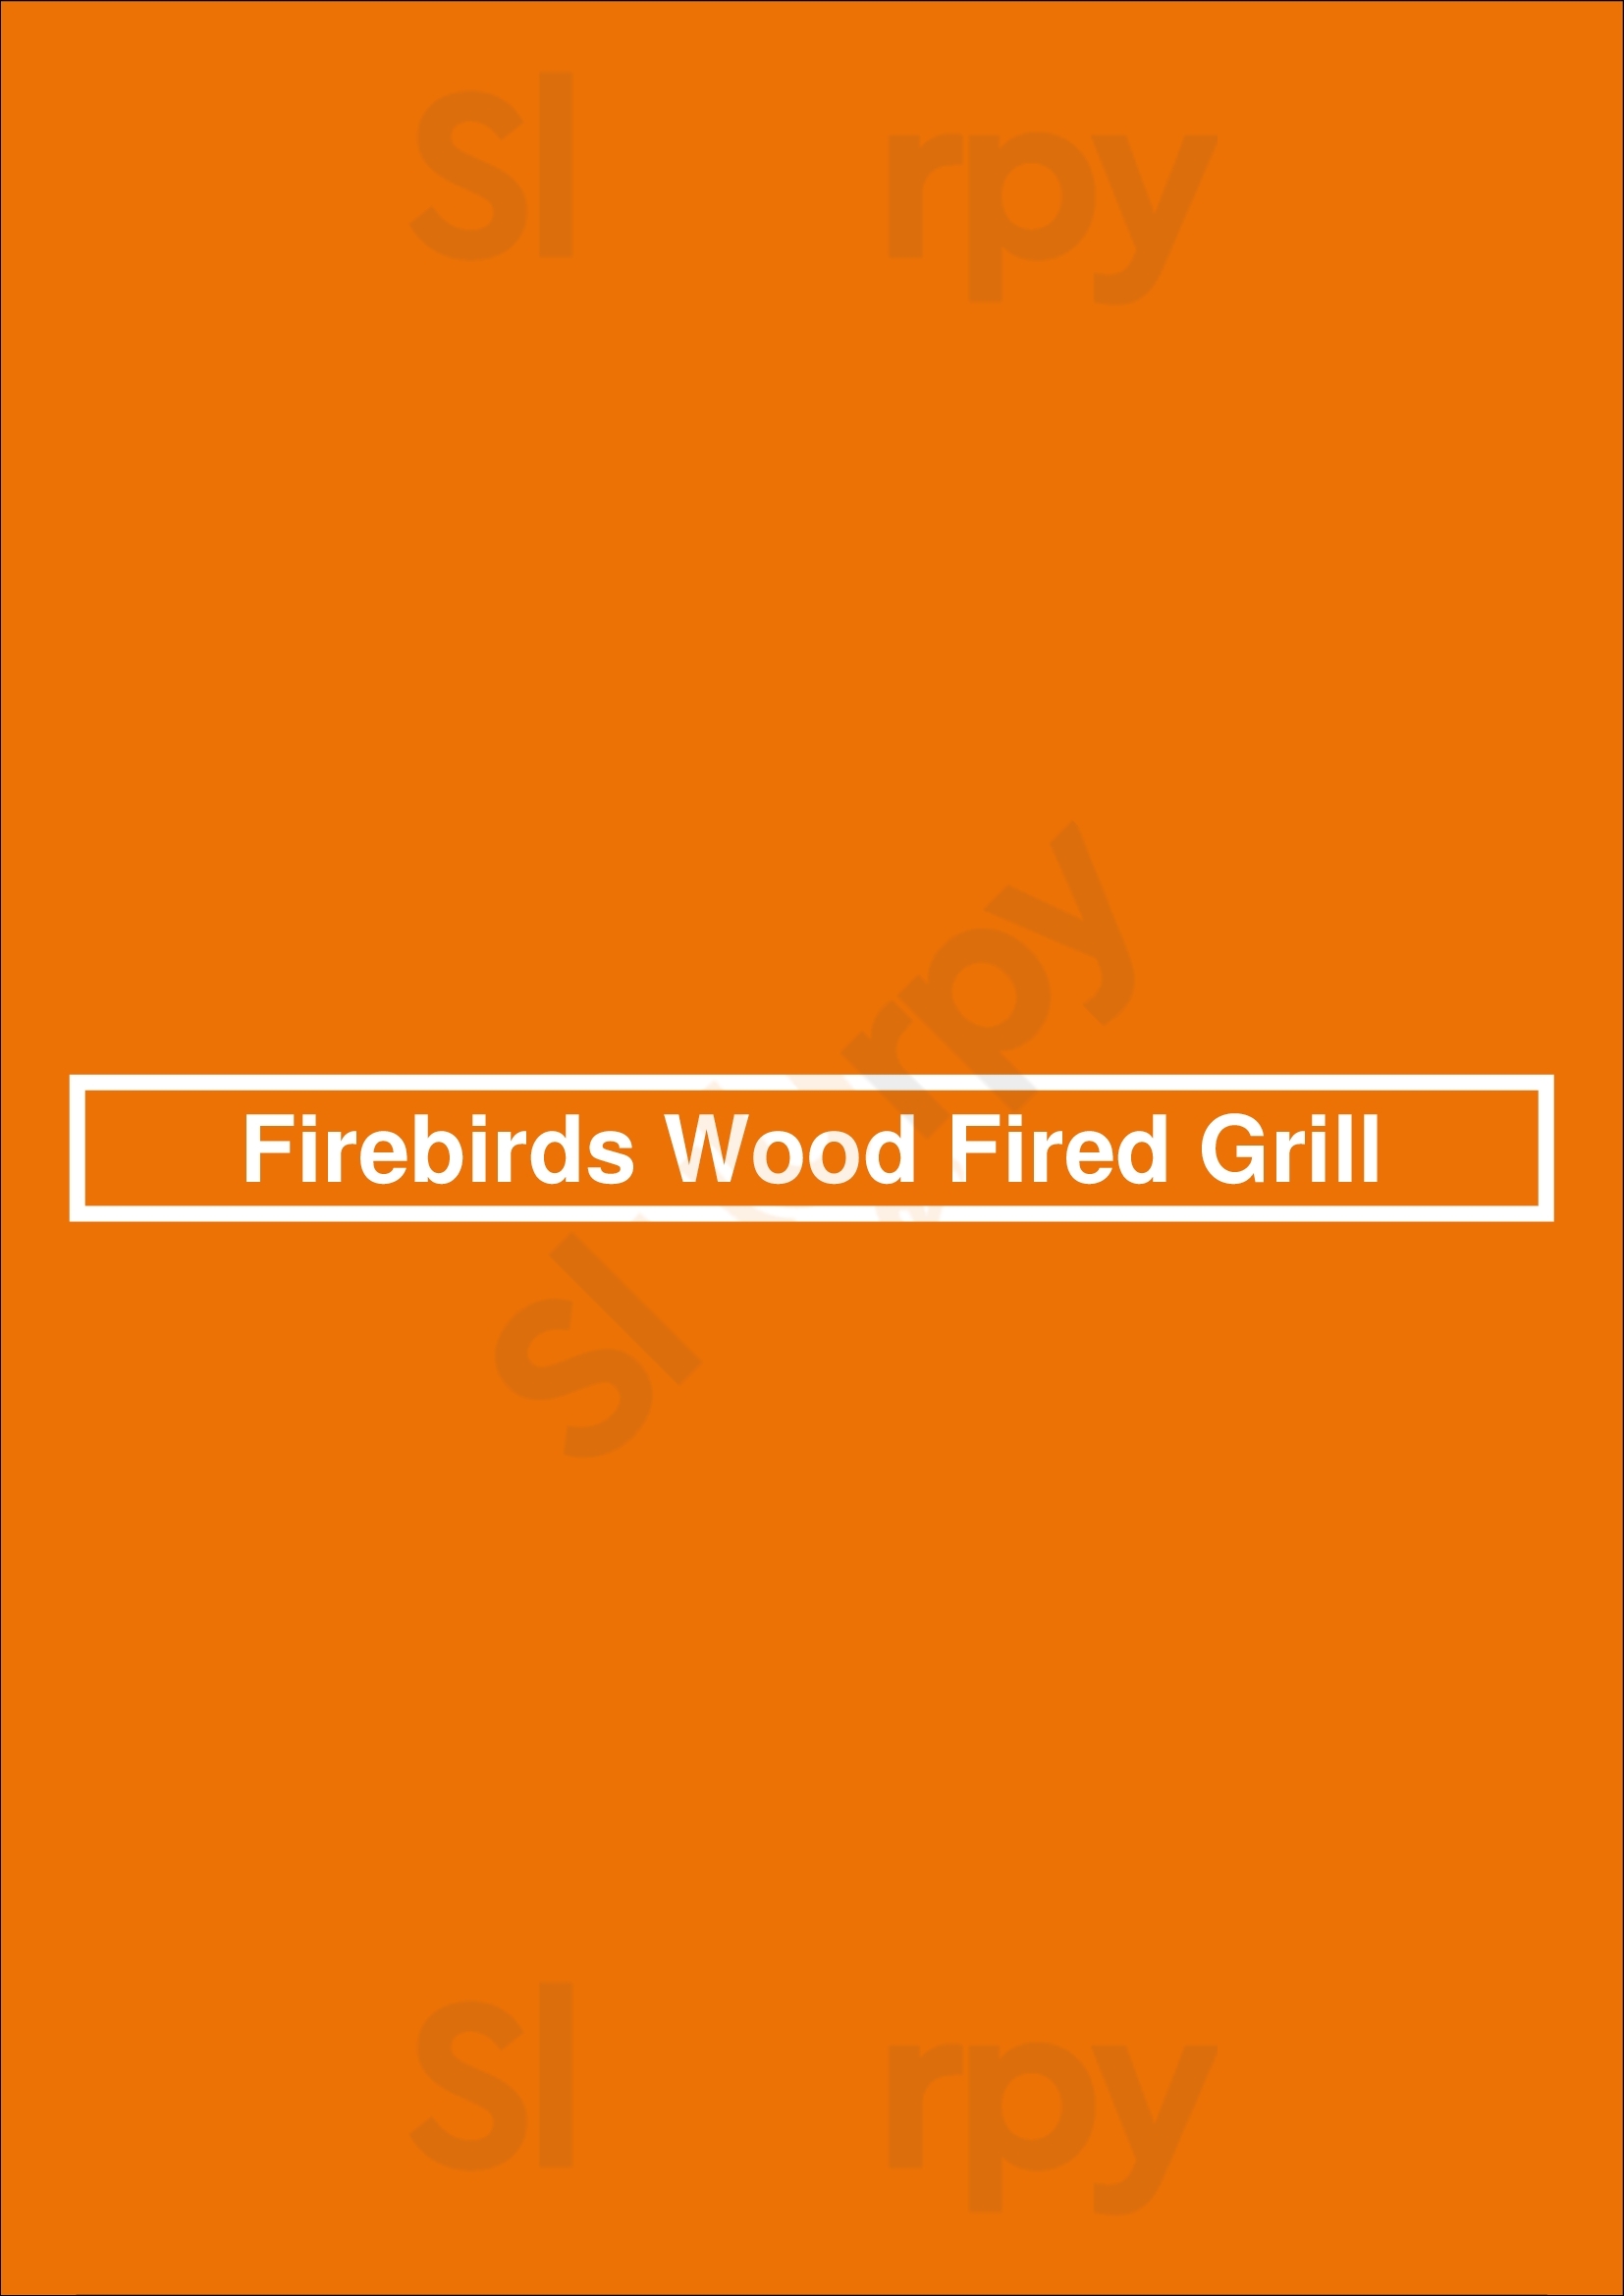 Firebirds Wood Fired Grill Charlotte Menu - 1